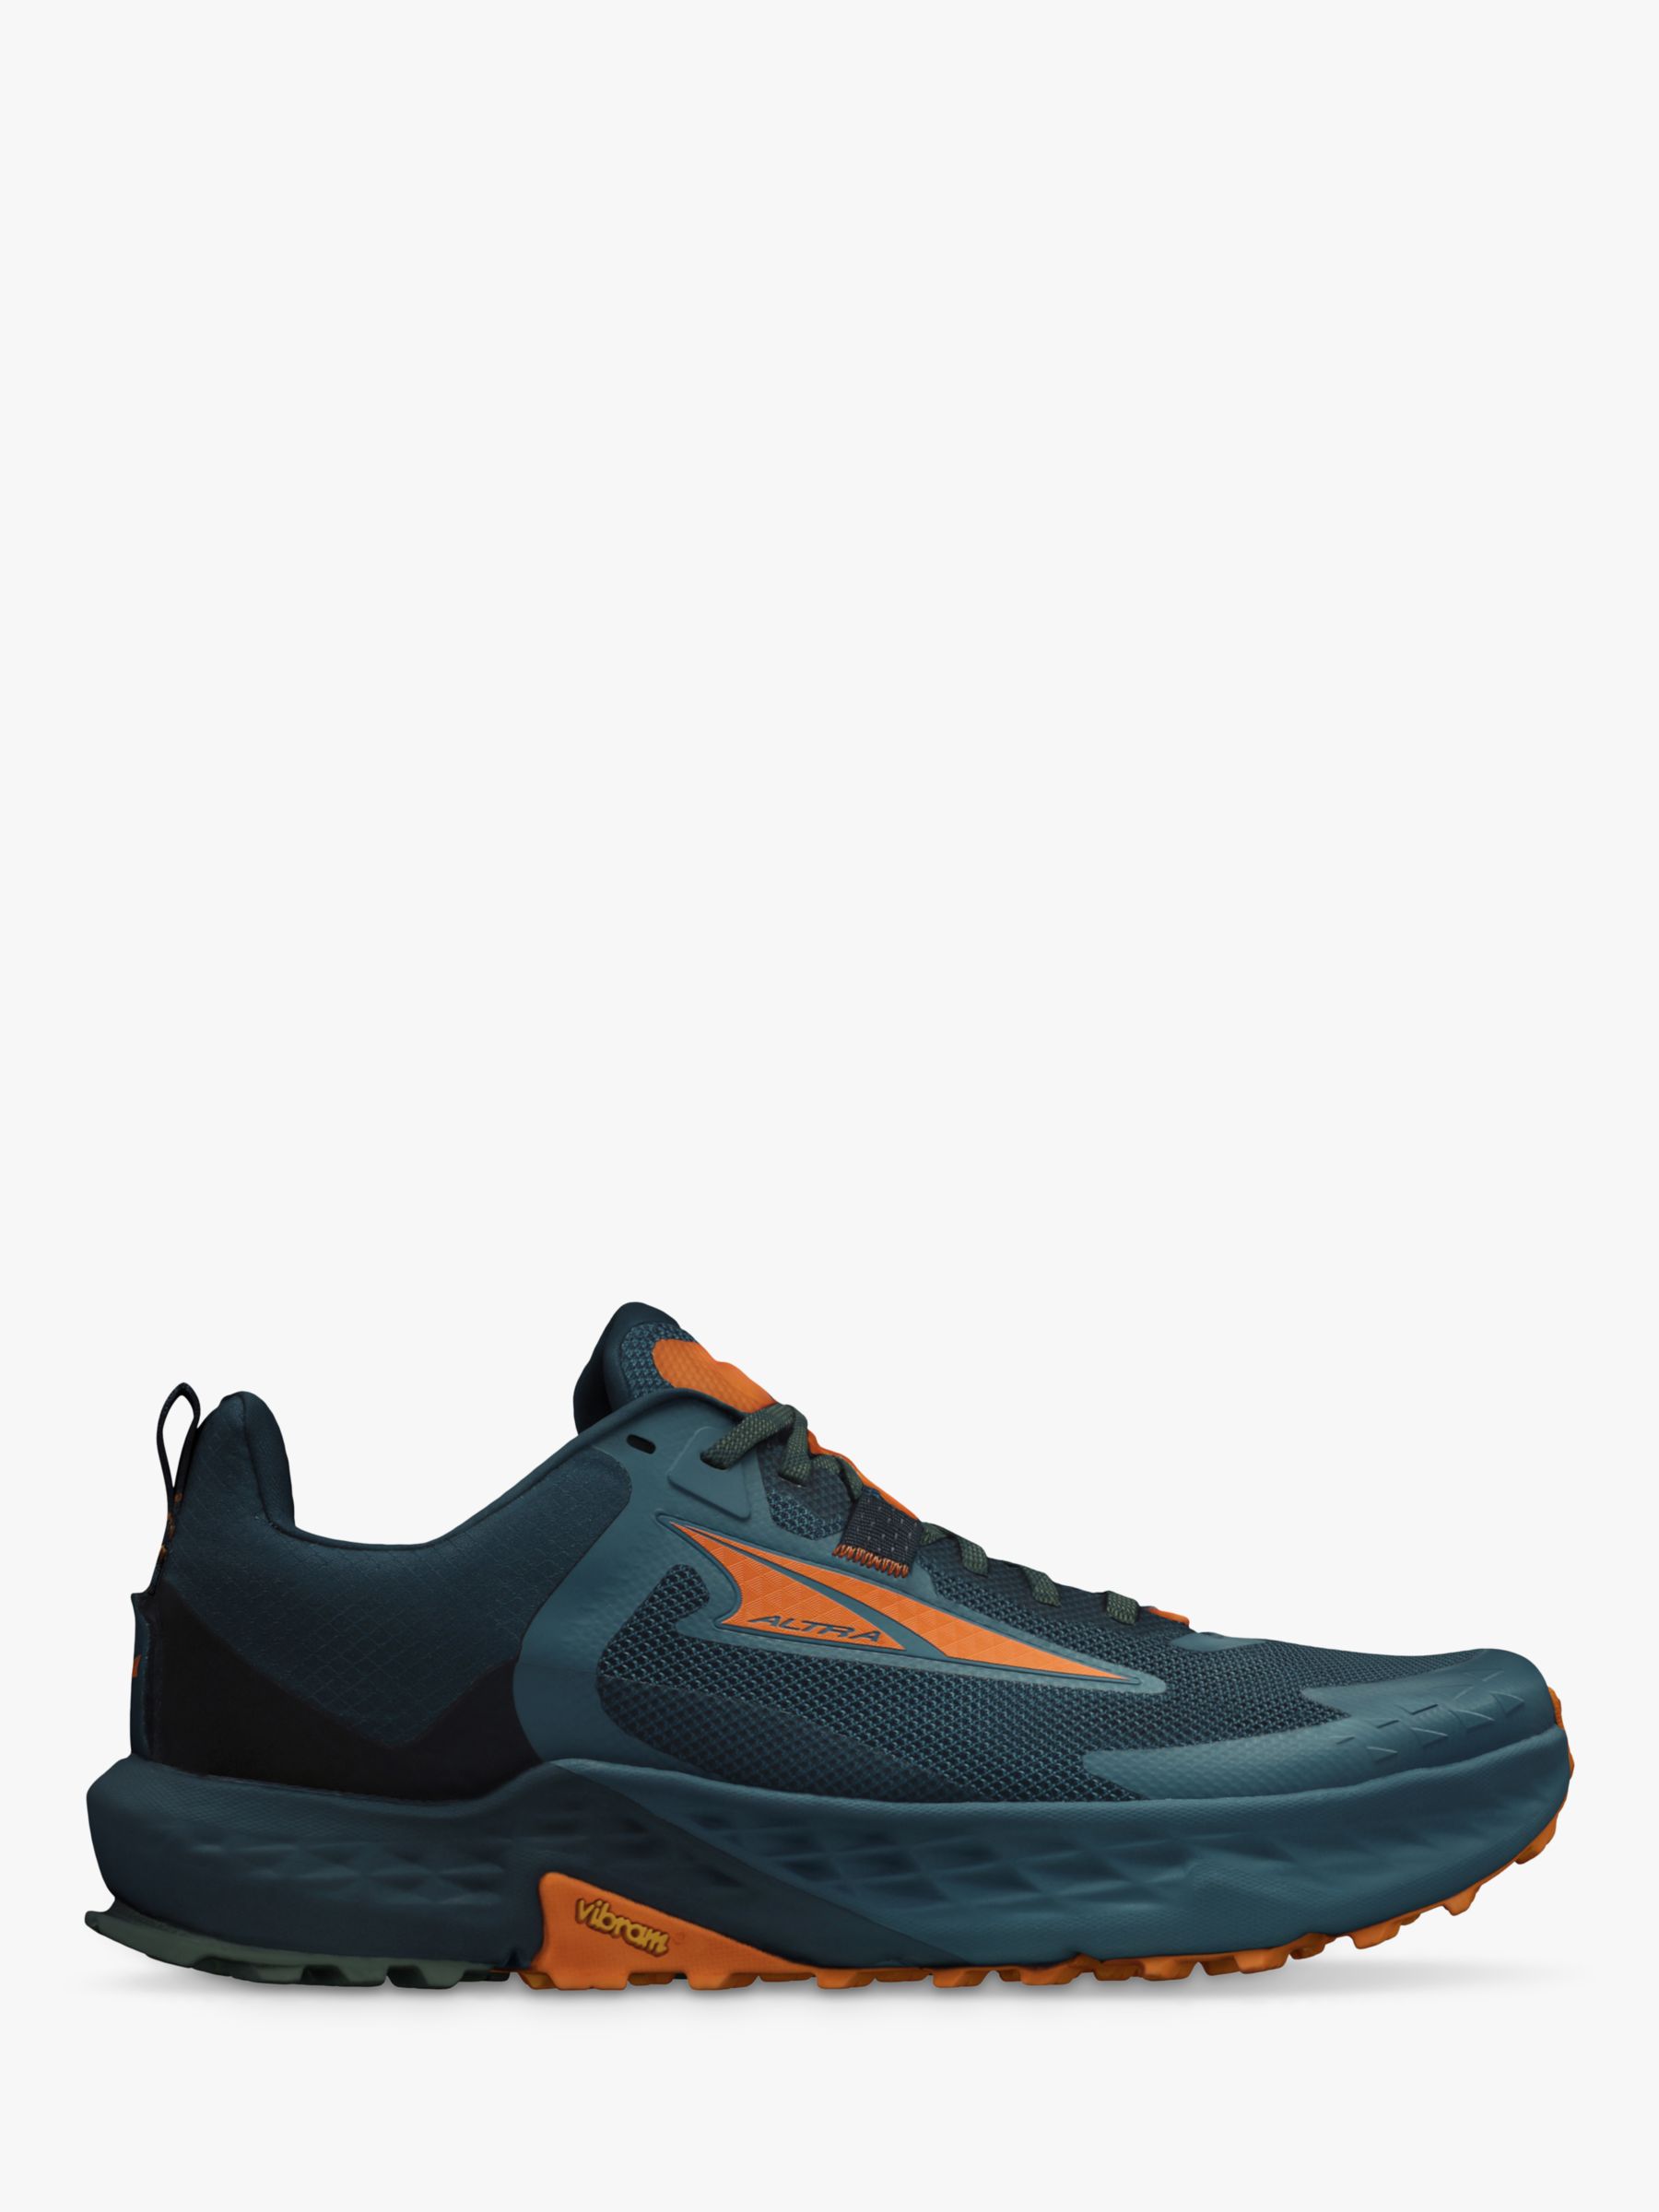 Altra Timp 5 Men's Running Shoes, Blue/Orange, 11